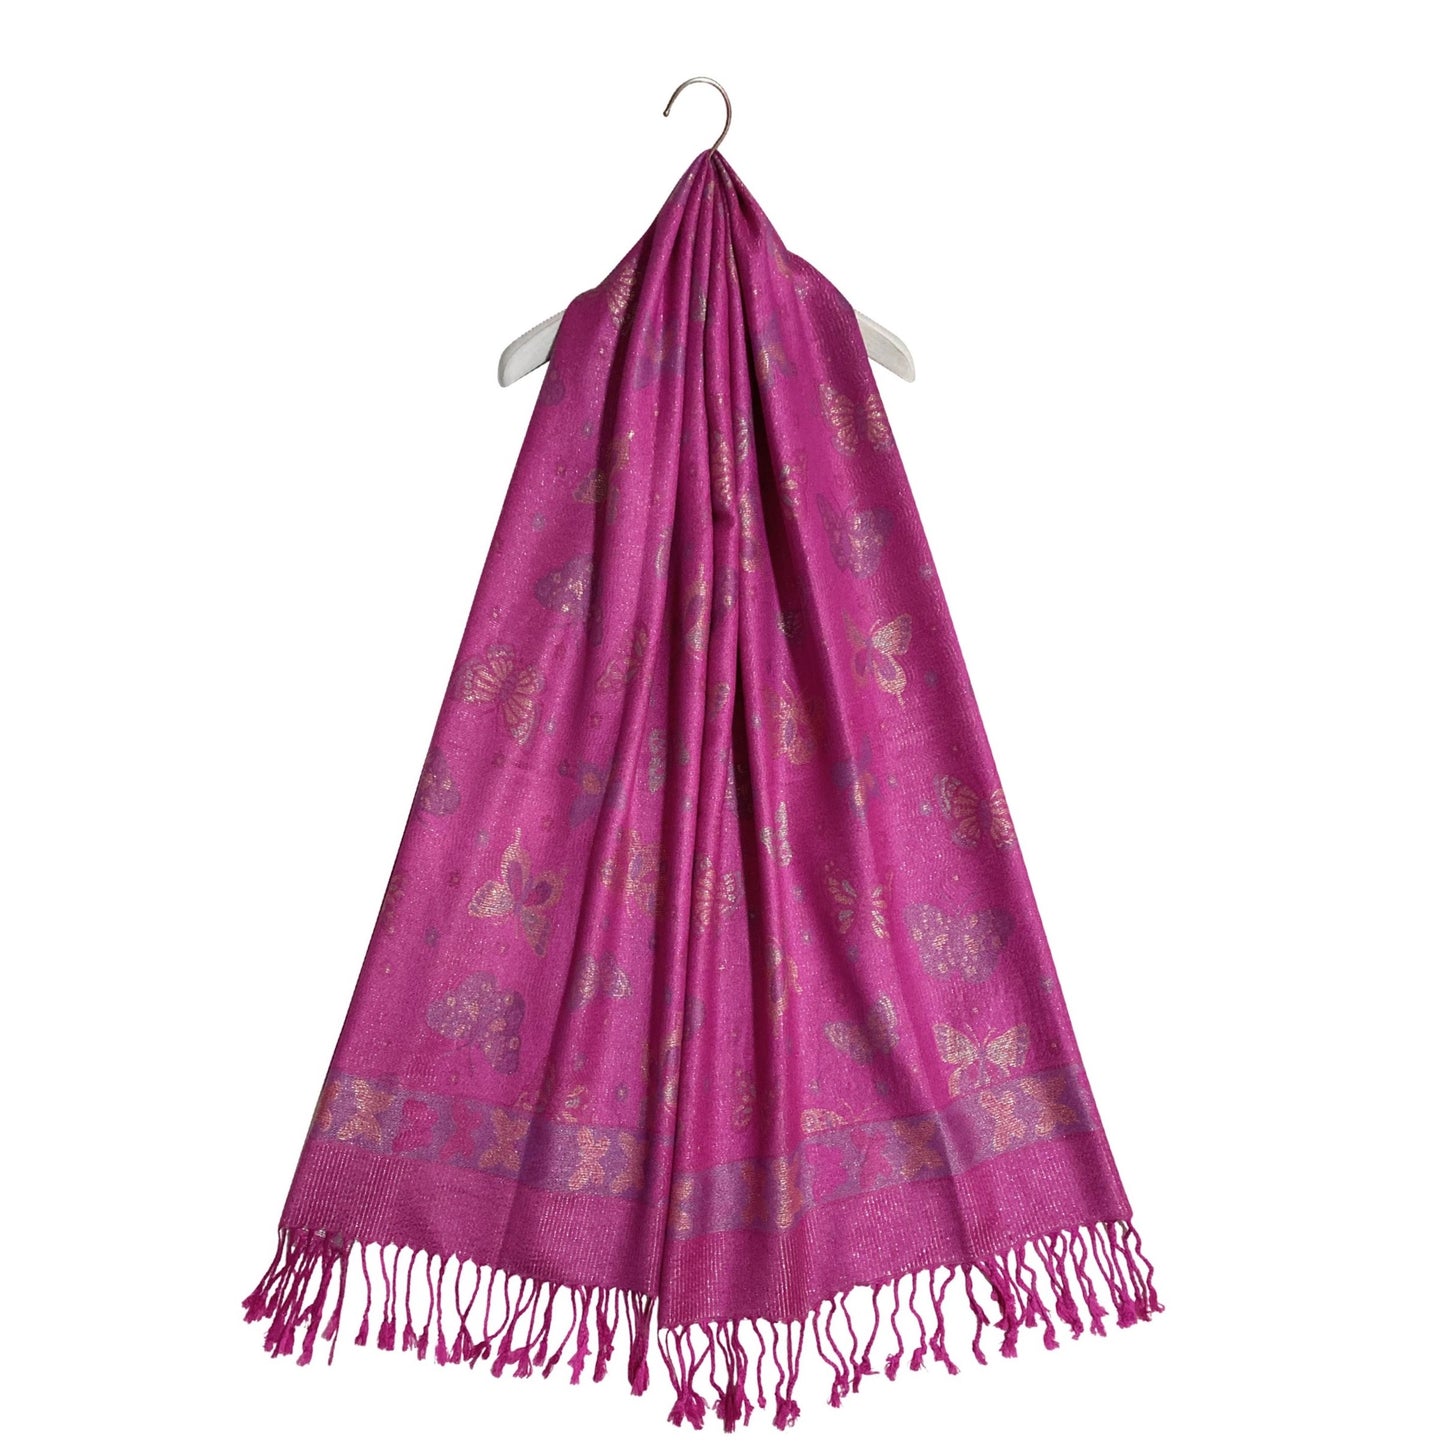 Bufanda de cachemira 100% pashmina auténtica, 70 cm x 170 cm, estampado de mariposas rosa fucsia brillante